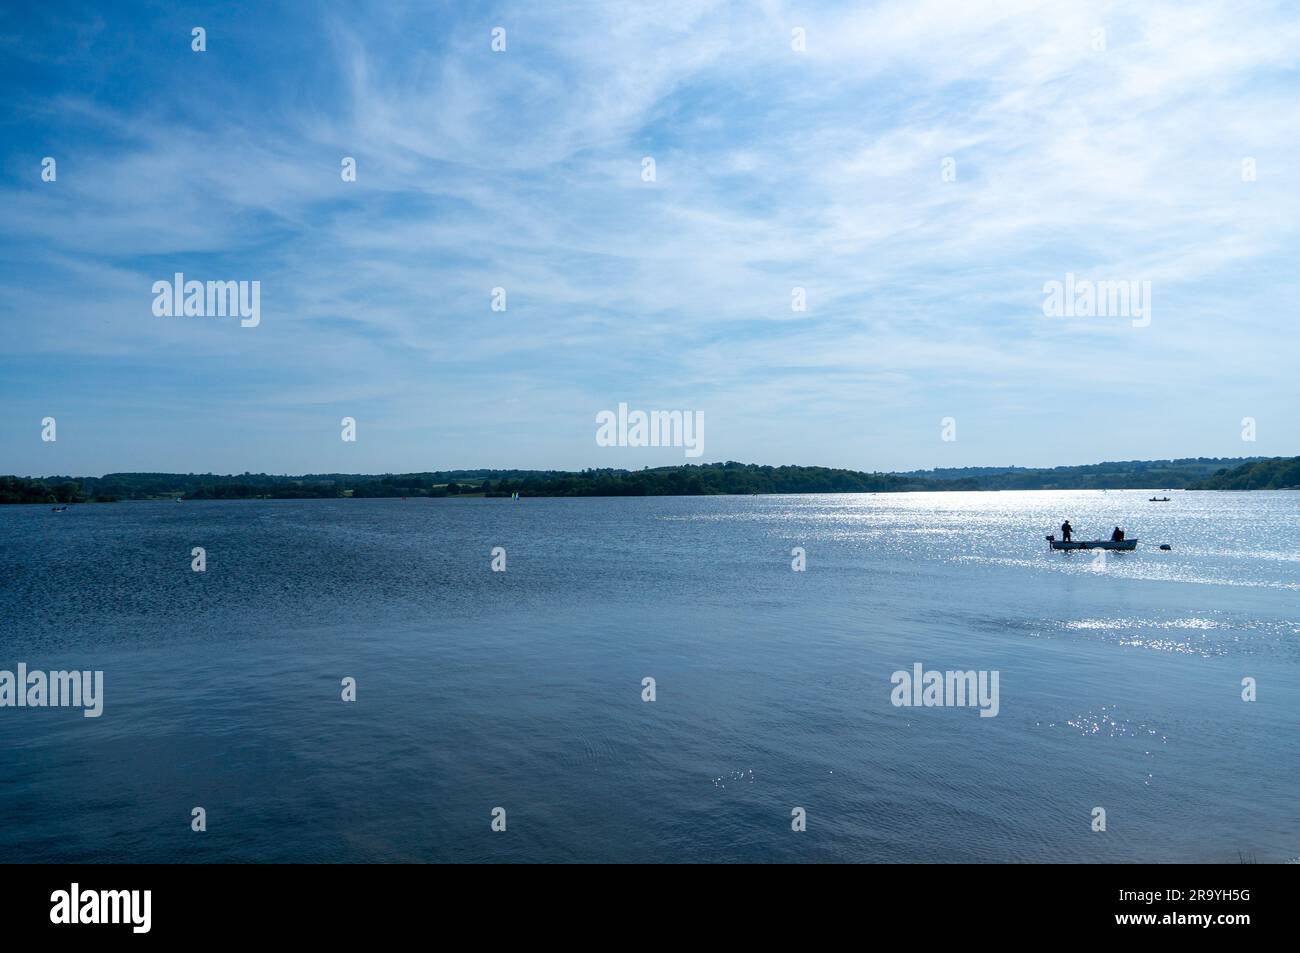 Serene lake view of people fishing Stock Photo